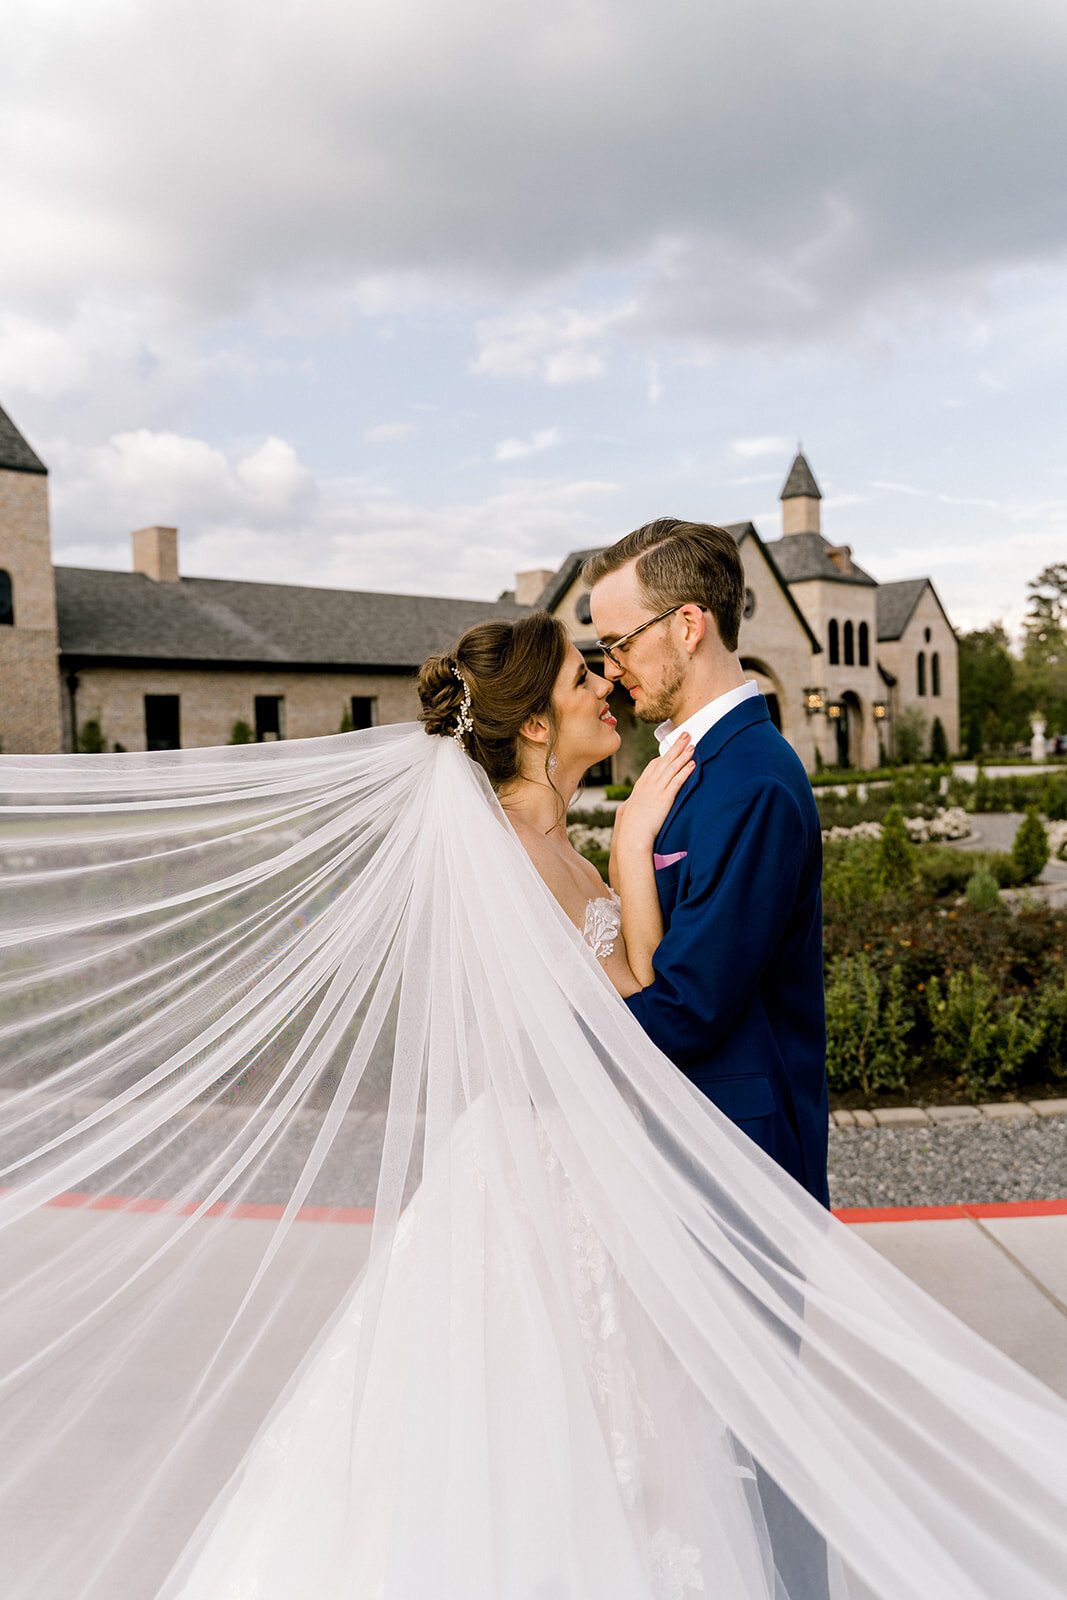 IRON MANOR WEDDING VENUE MONTGOMERY TEXAS - wedding photographers - We the Romantics - Sarah+Michael-51